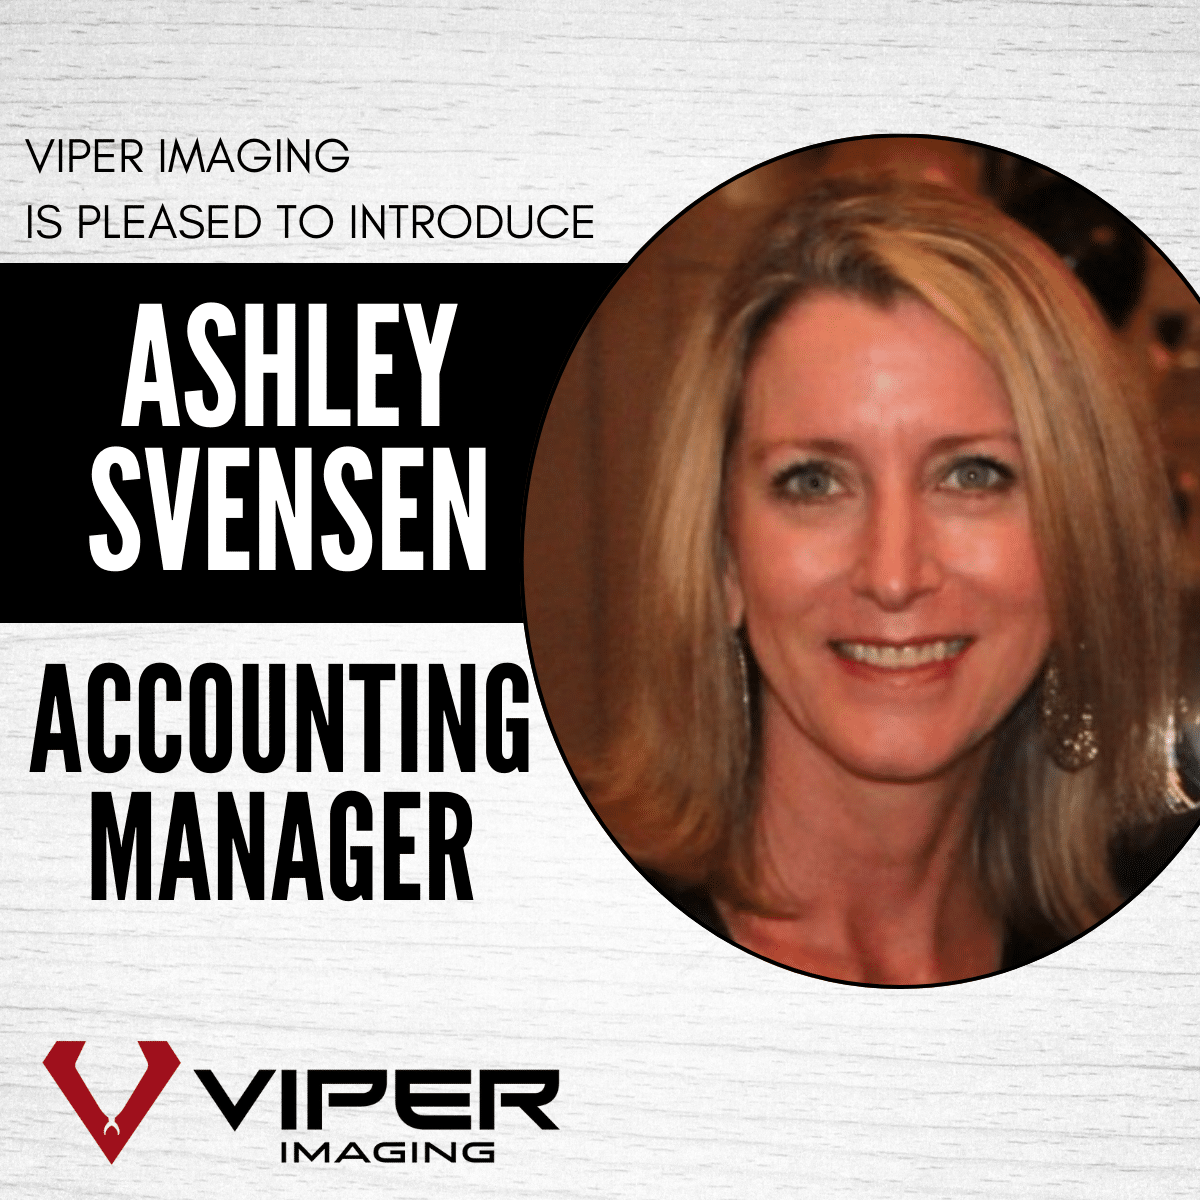 Viper introduces Ashley Svensen